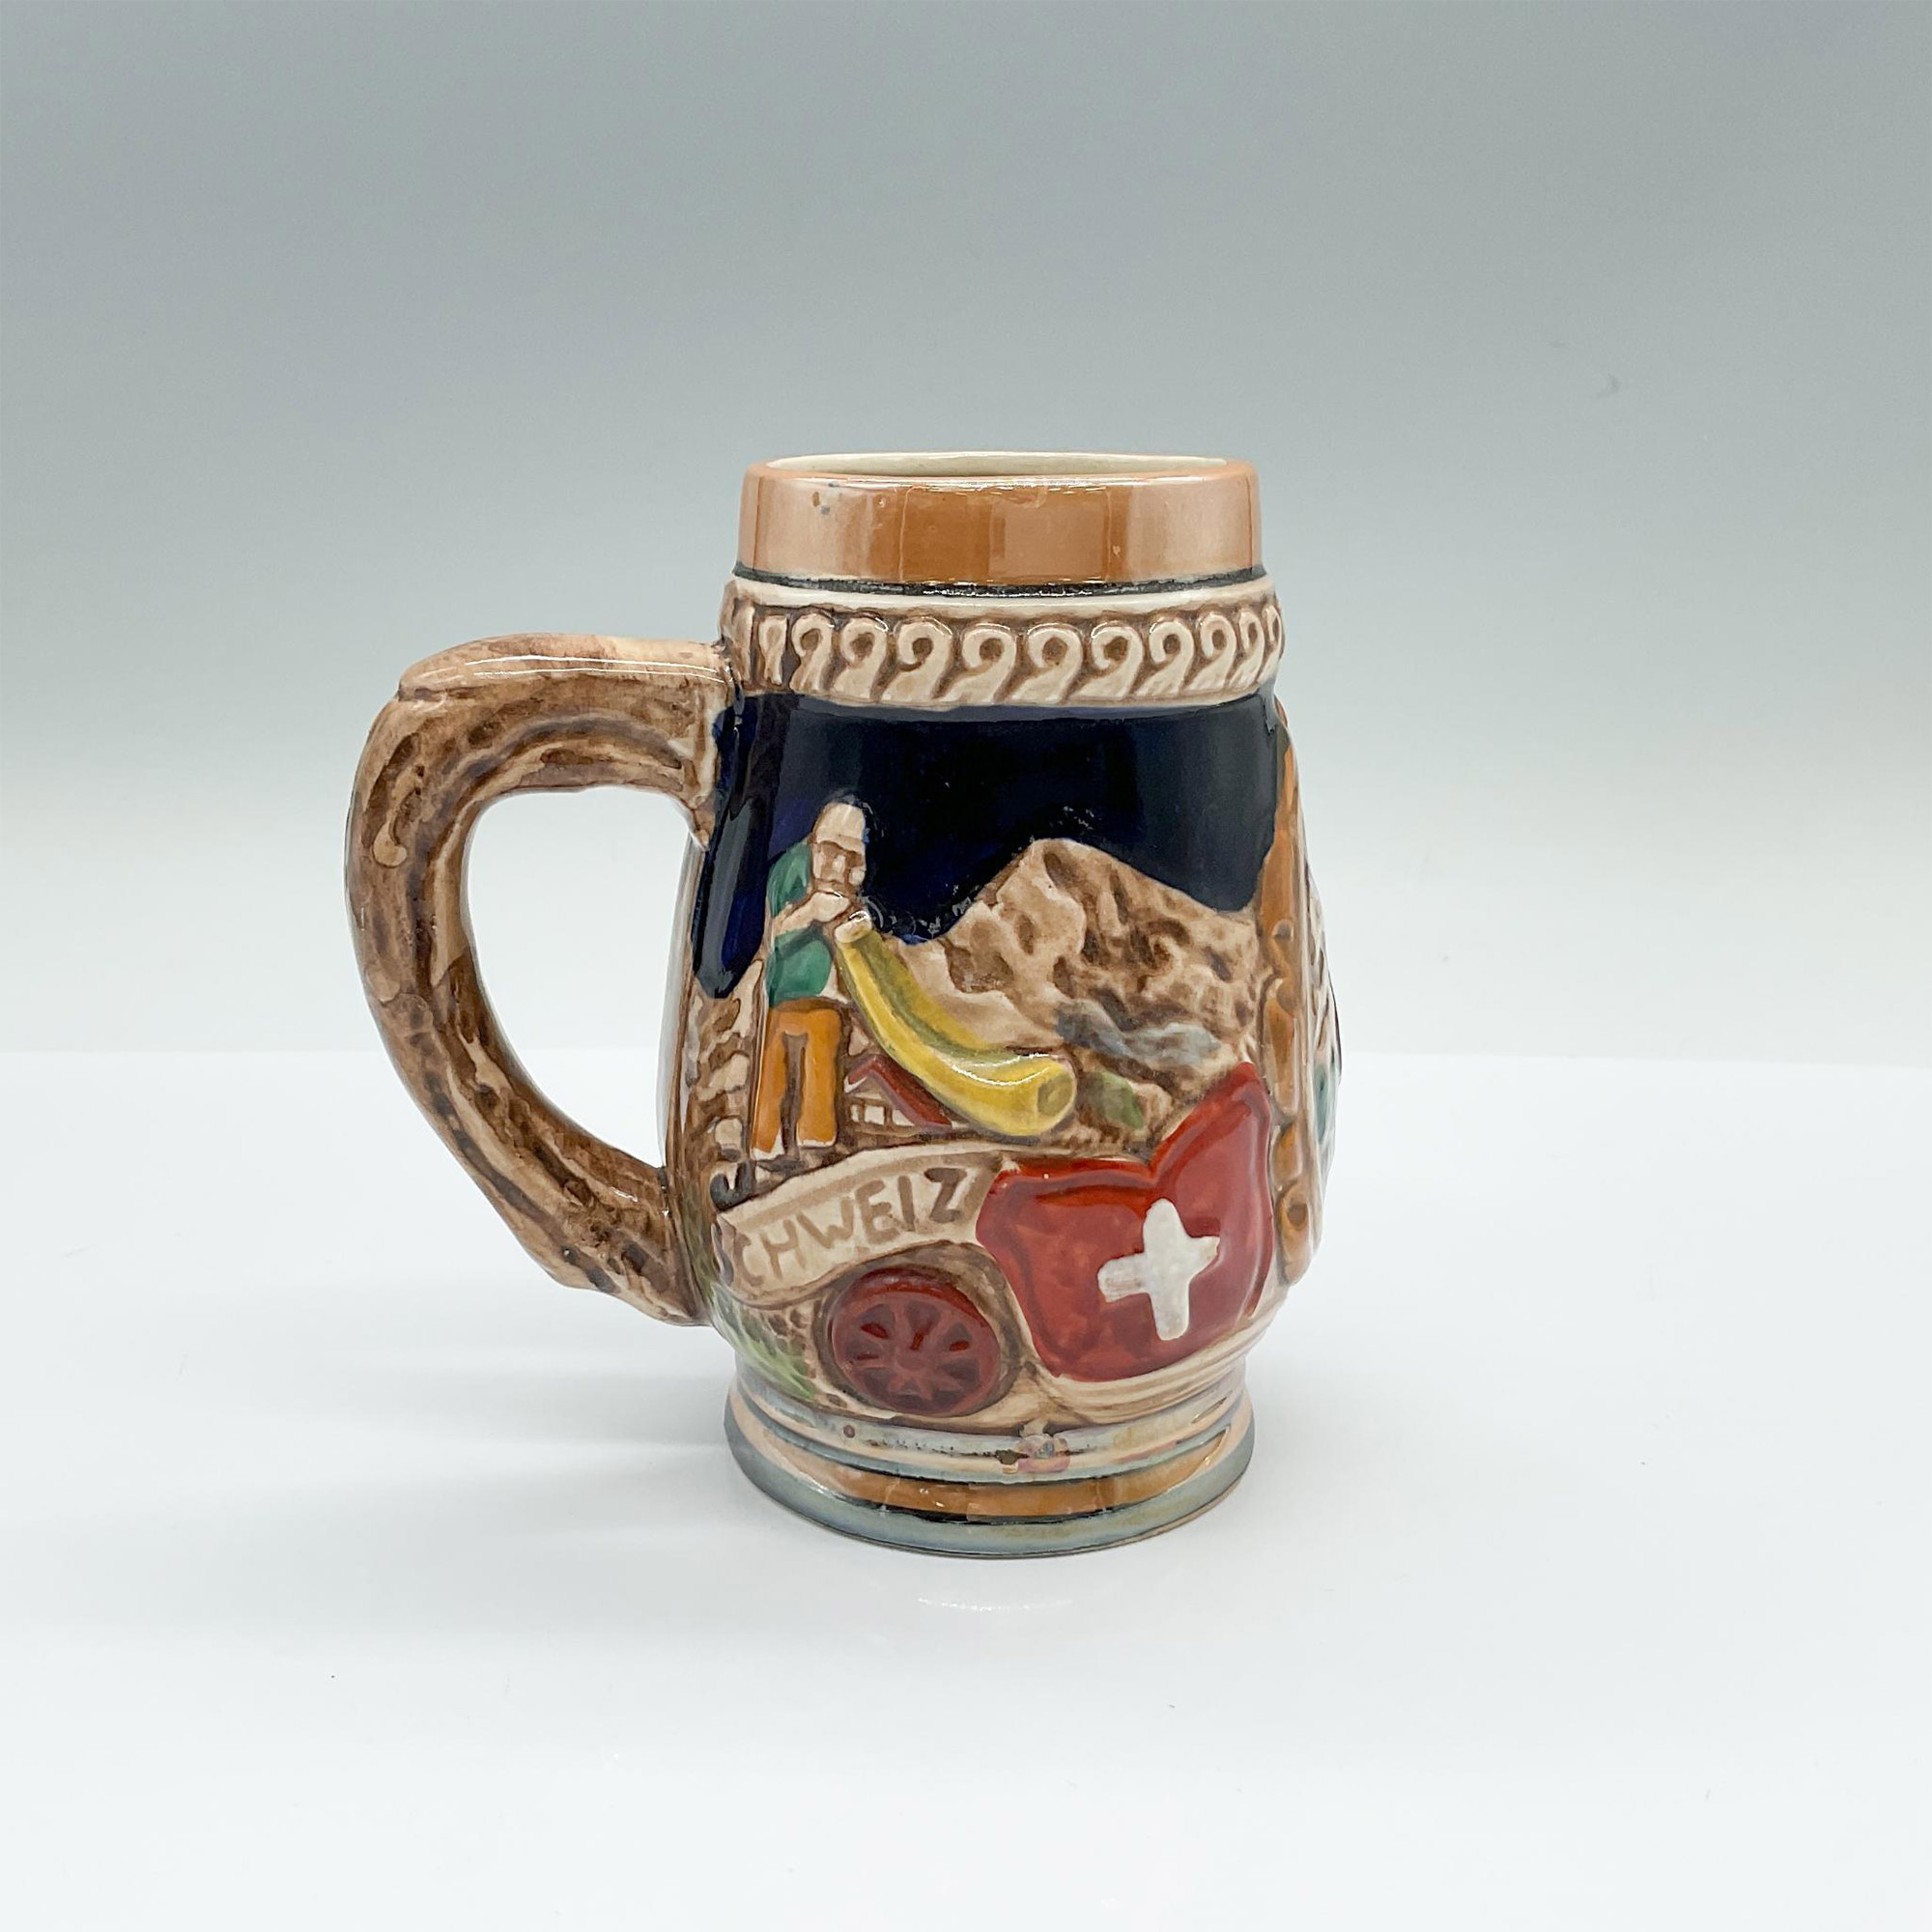 Vintage Switzerland Suisse Schweiz Ceramic Beer Mug - Image 2 of 4